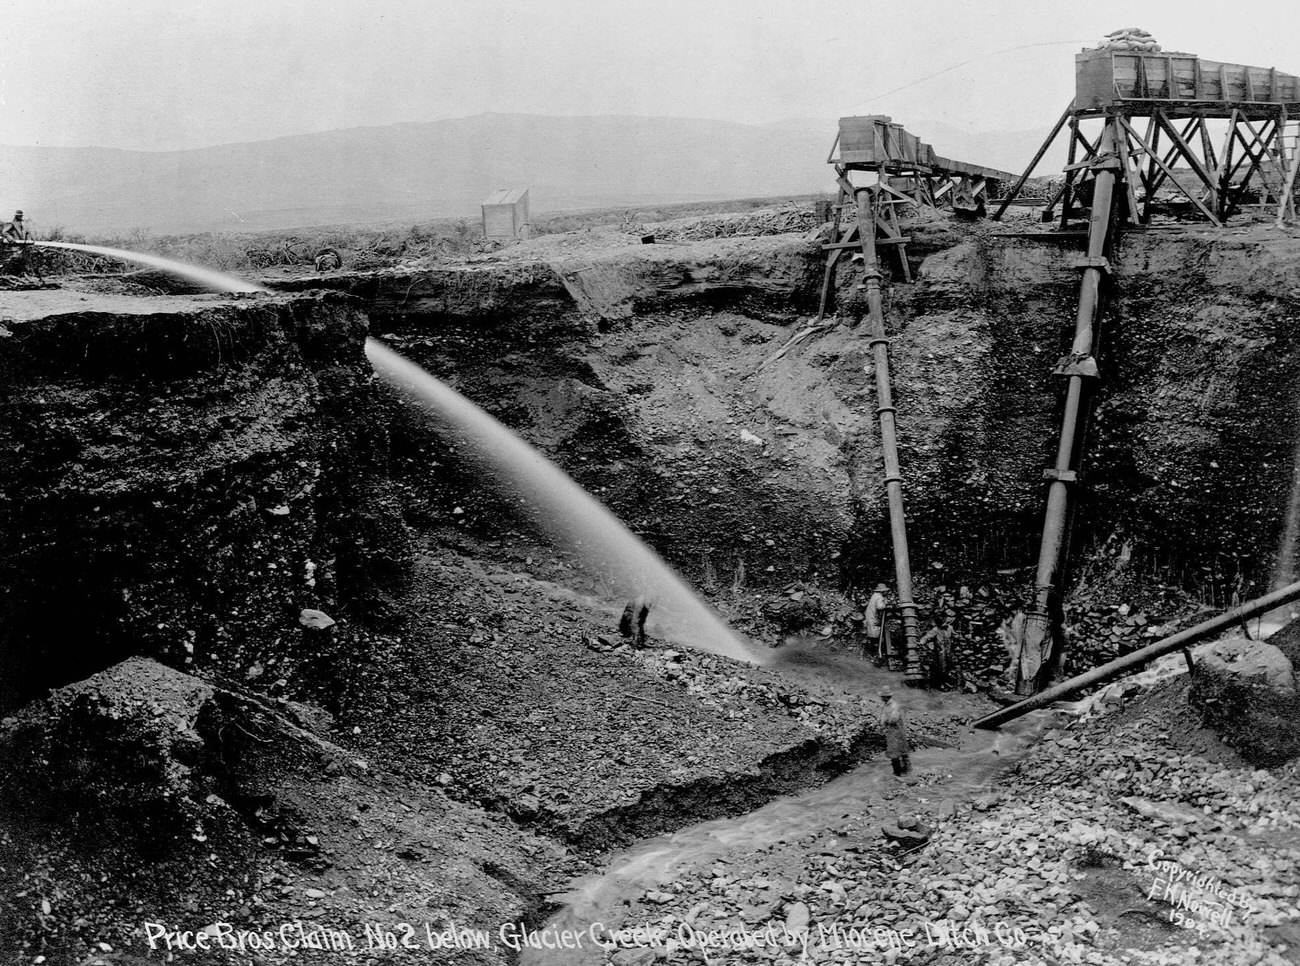 Miners sluicing land near Glacier Creek, Alaska, for hydraulic gold mining.